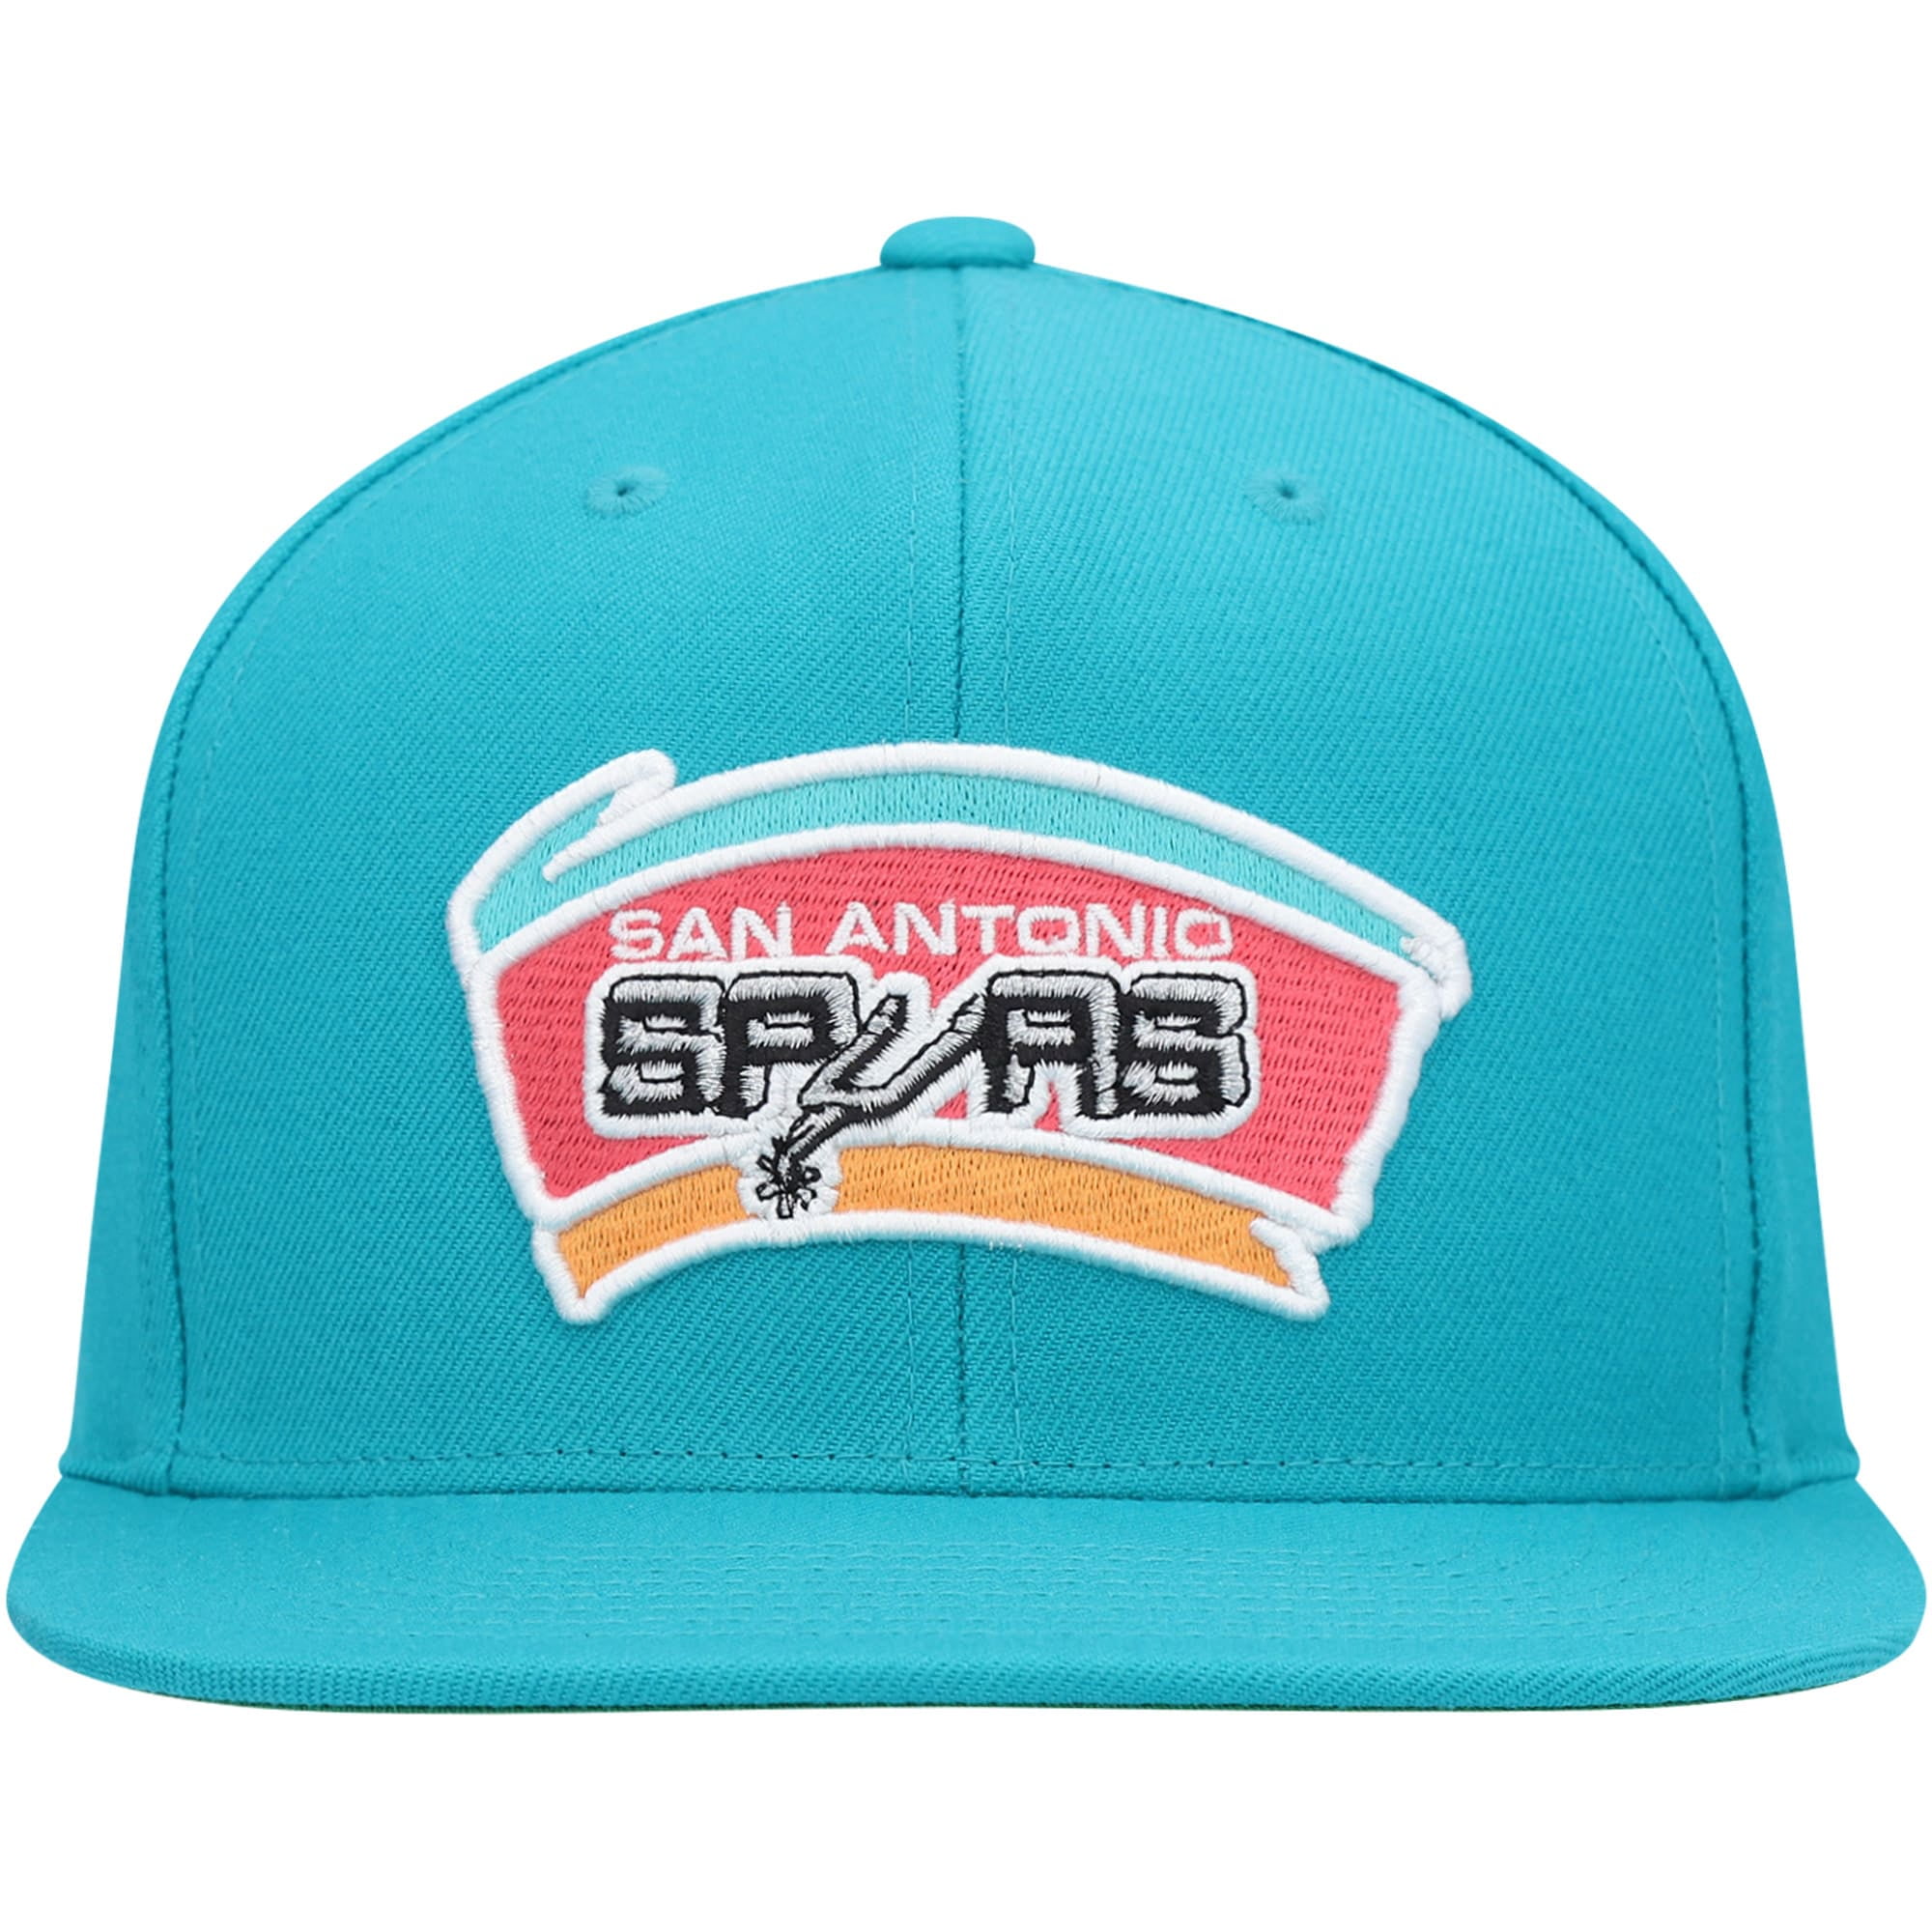 Mitchell & Ness San Antonio Spurs NBA Paintbrush Snapback Hat (White/Teal)